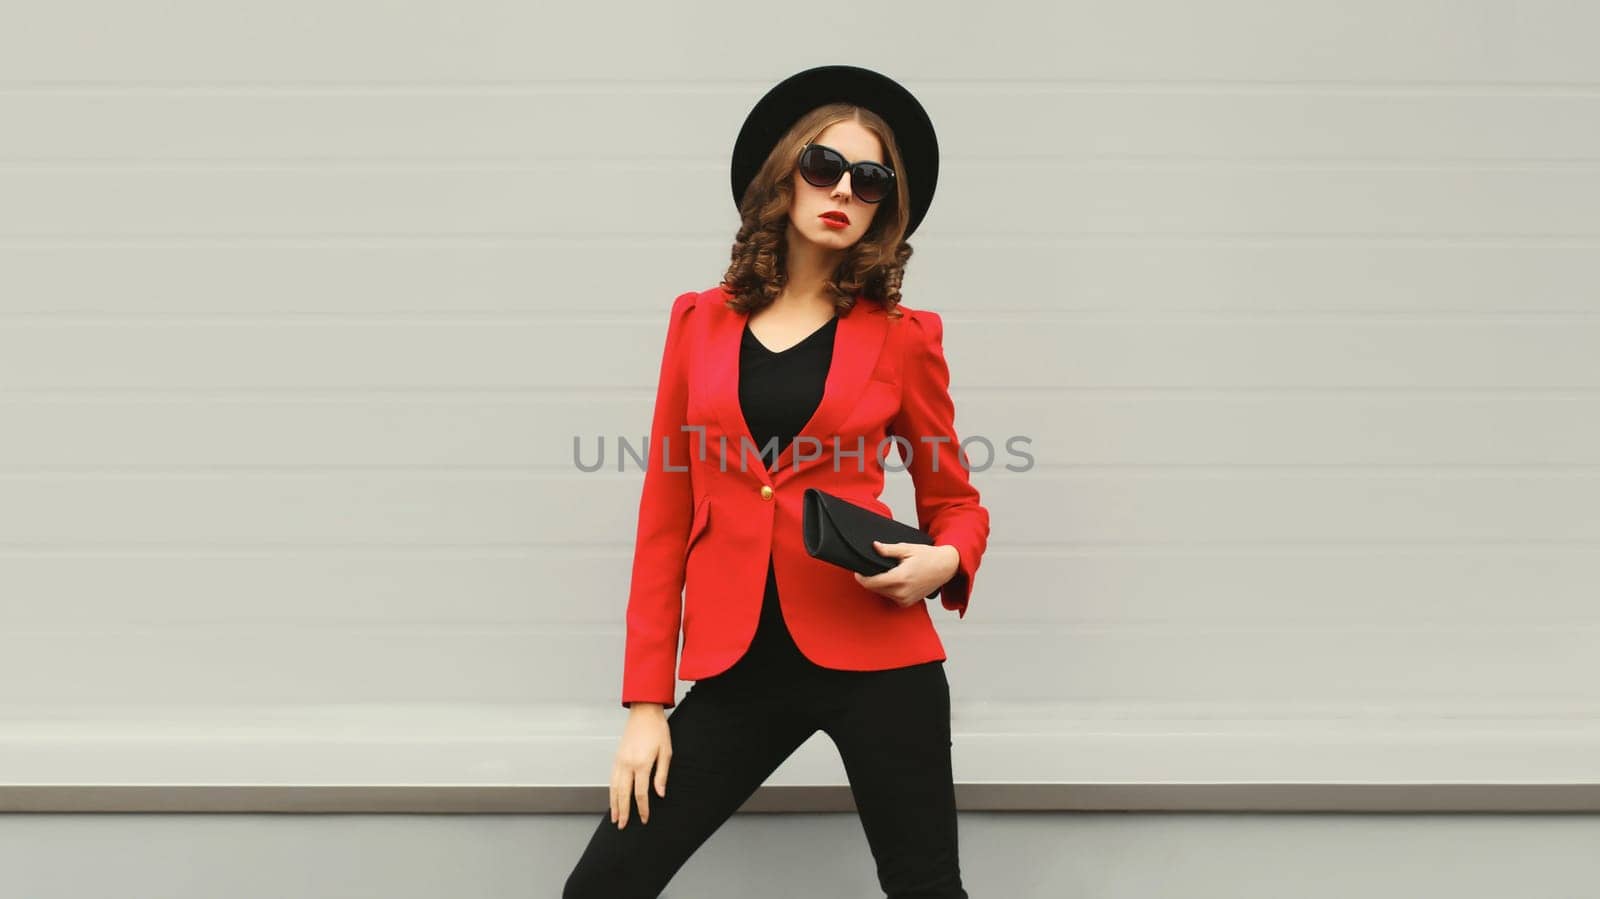 Stylish elegant woman posing in business suit, red blazer jacket, black round hat with handbag clutch